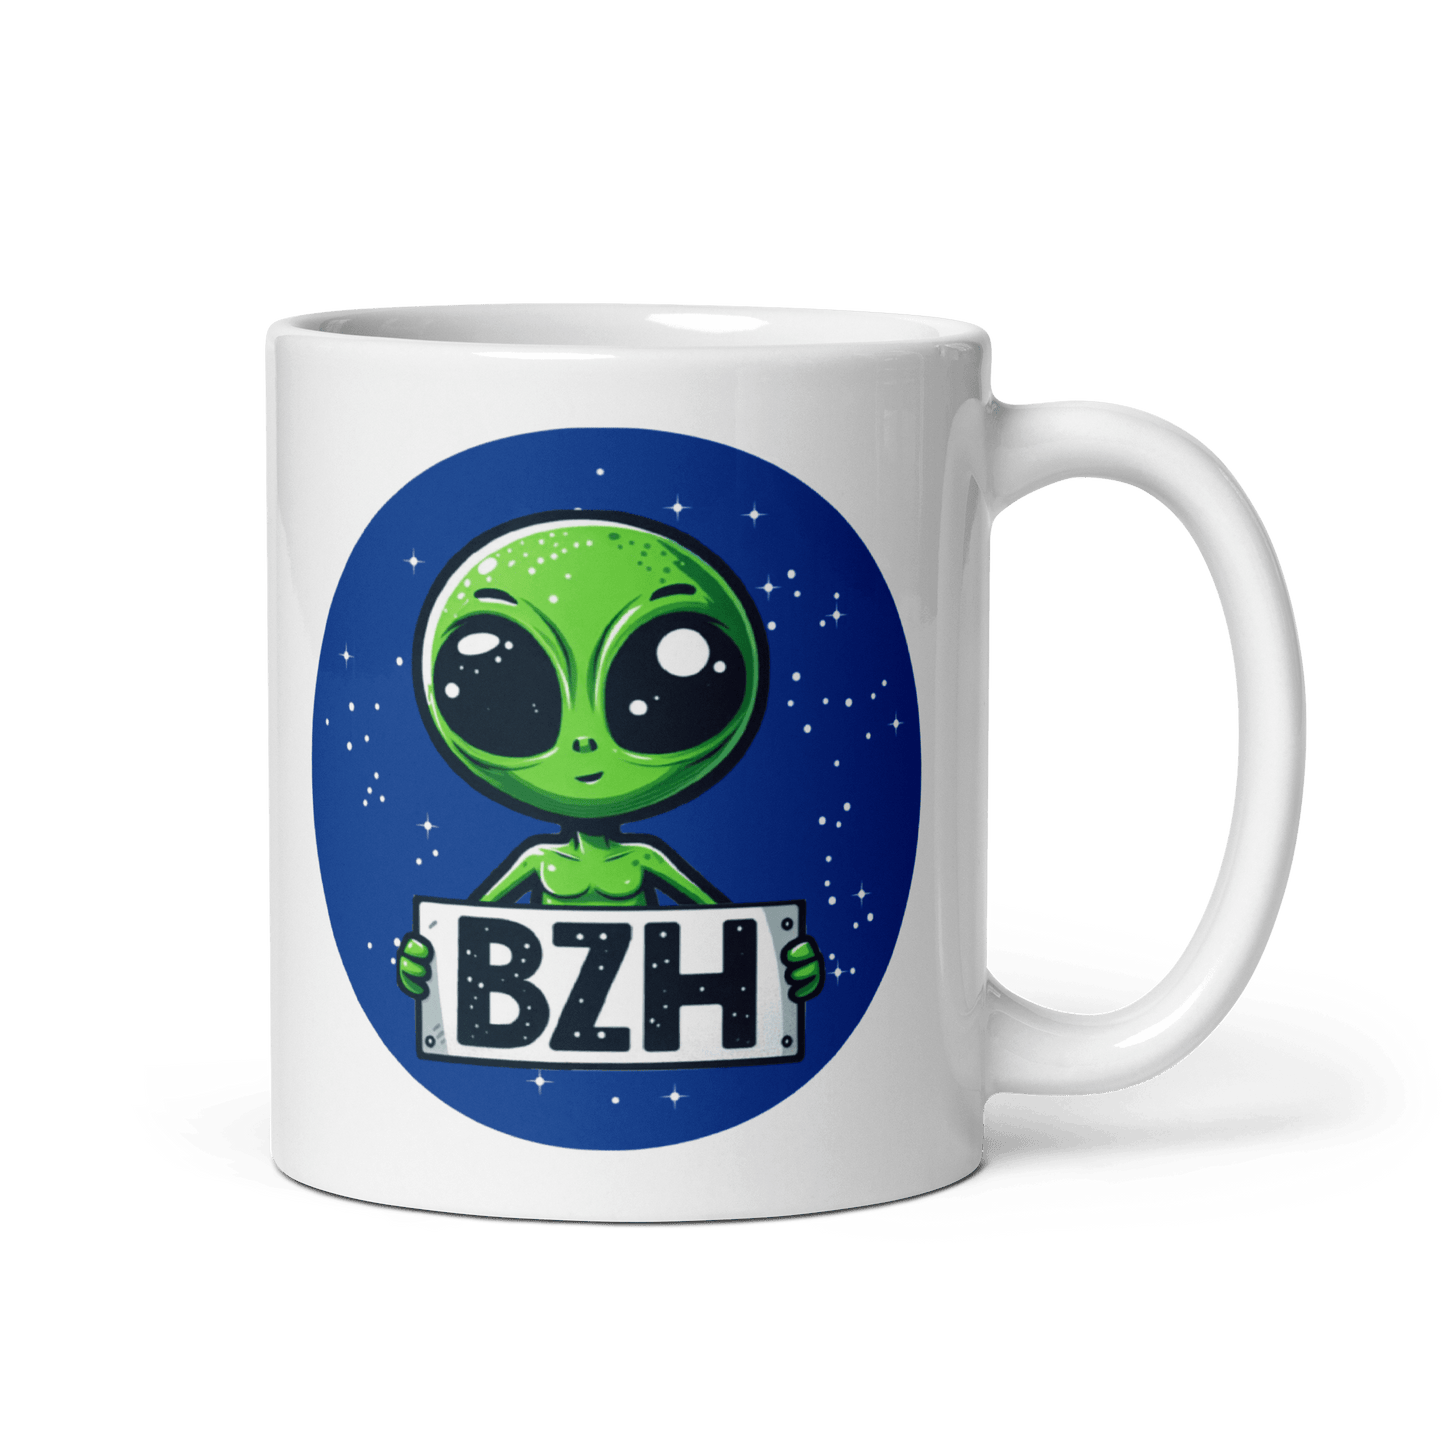 Mug Alien BZH : Adoptez l'extra-terrestre breton !